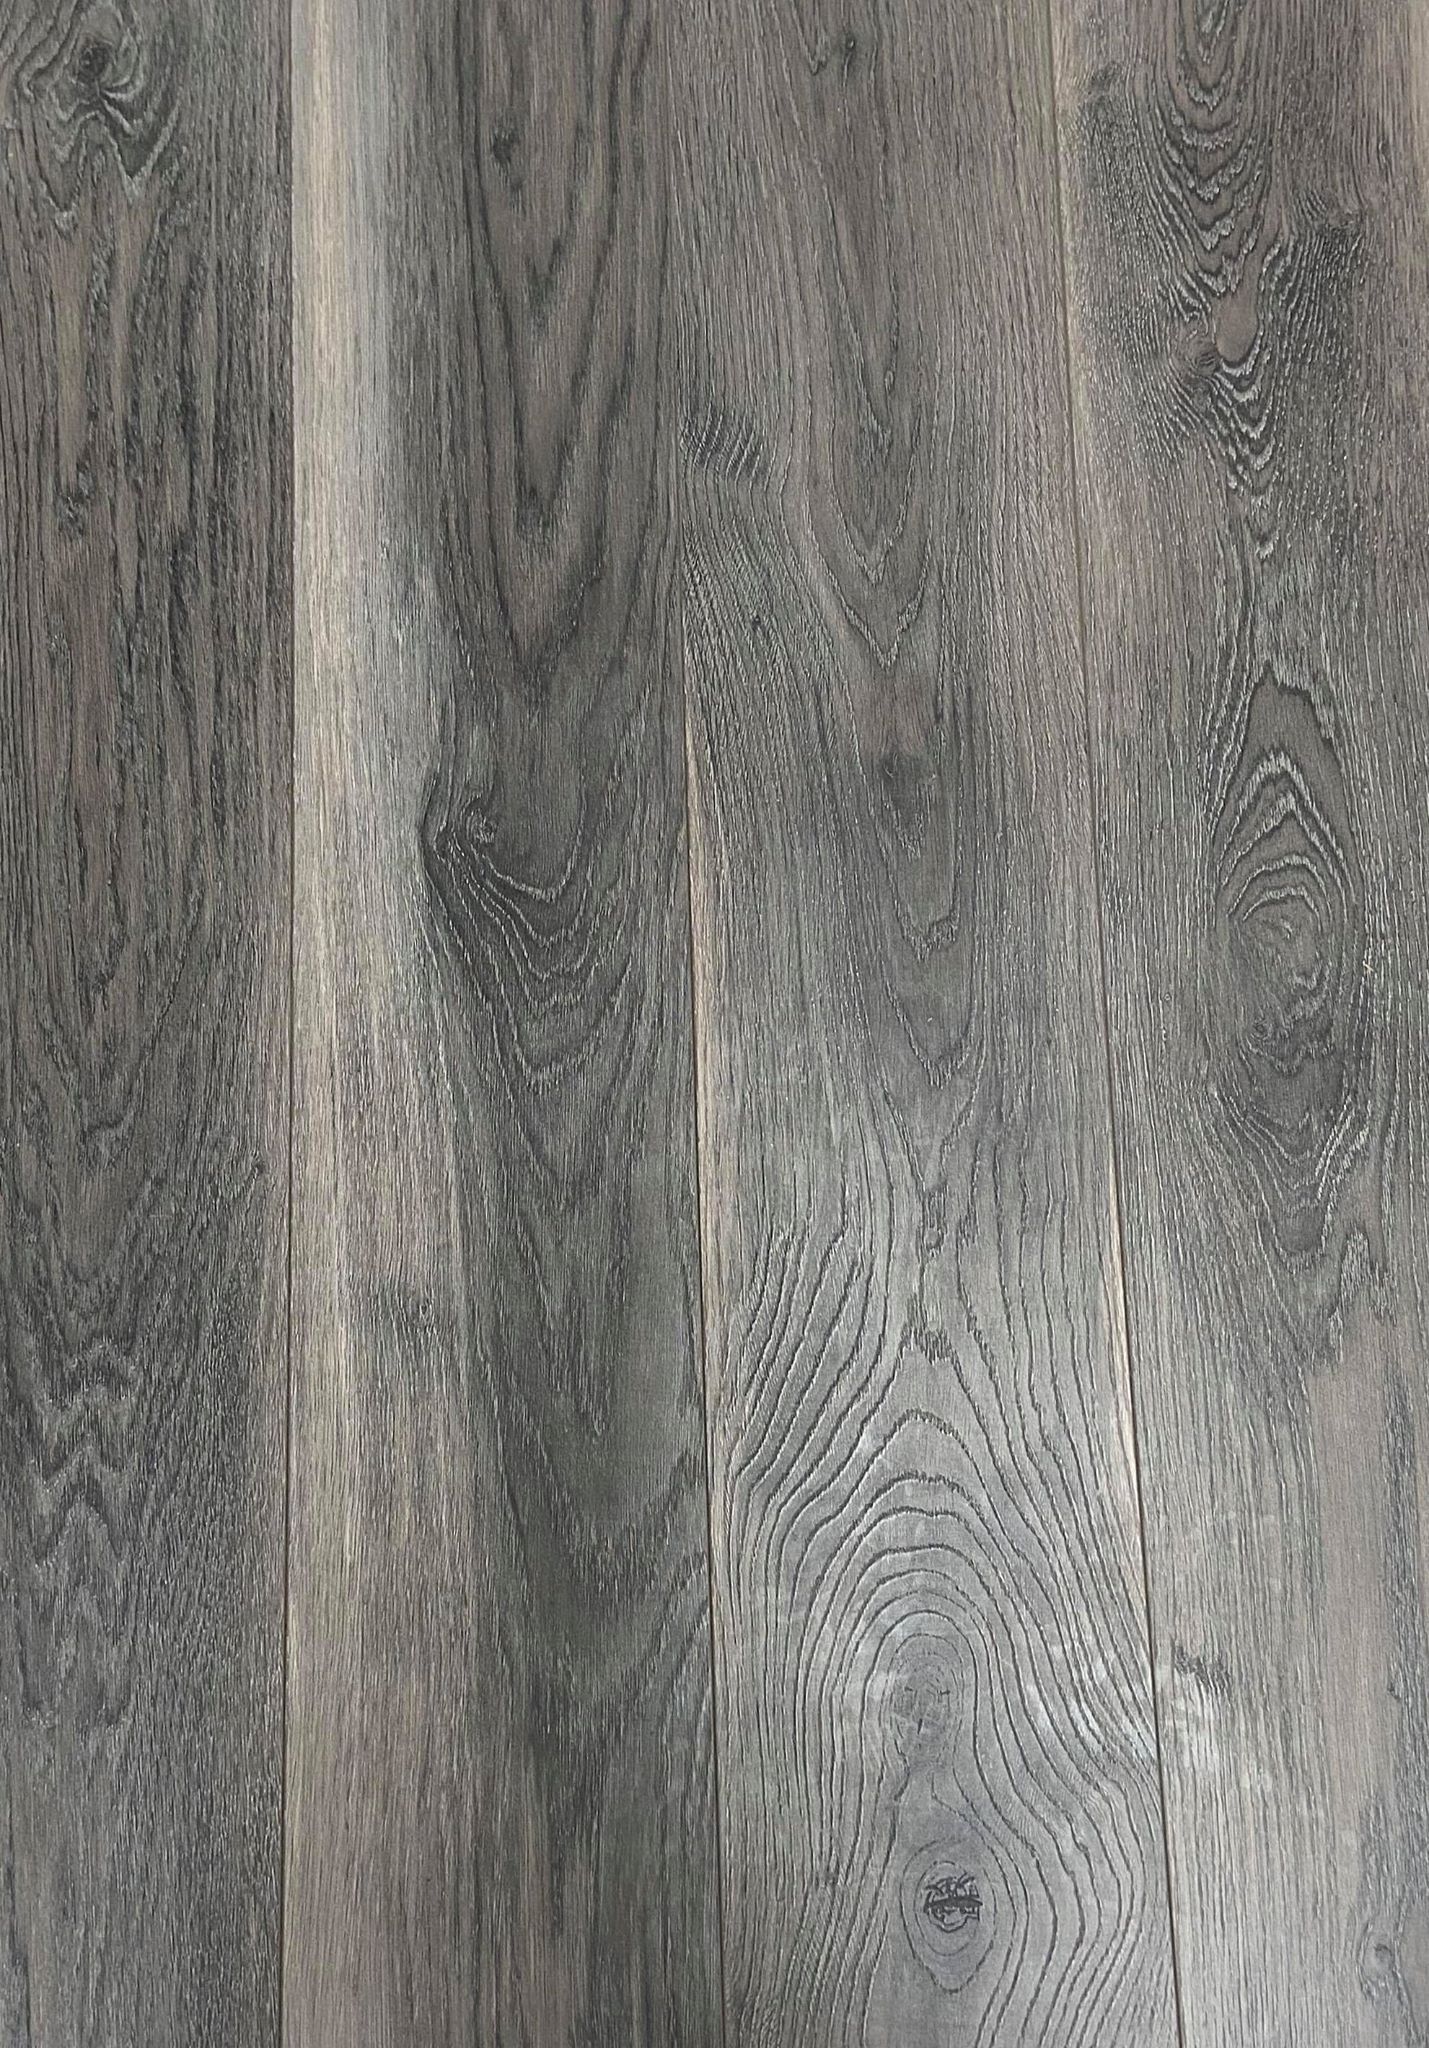 Classic Laminate Dark Grey Oak Flooring, Dark Grey Wood Effect Laminate Flooring